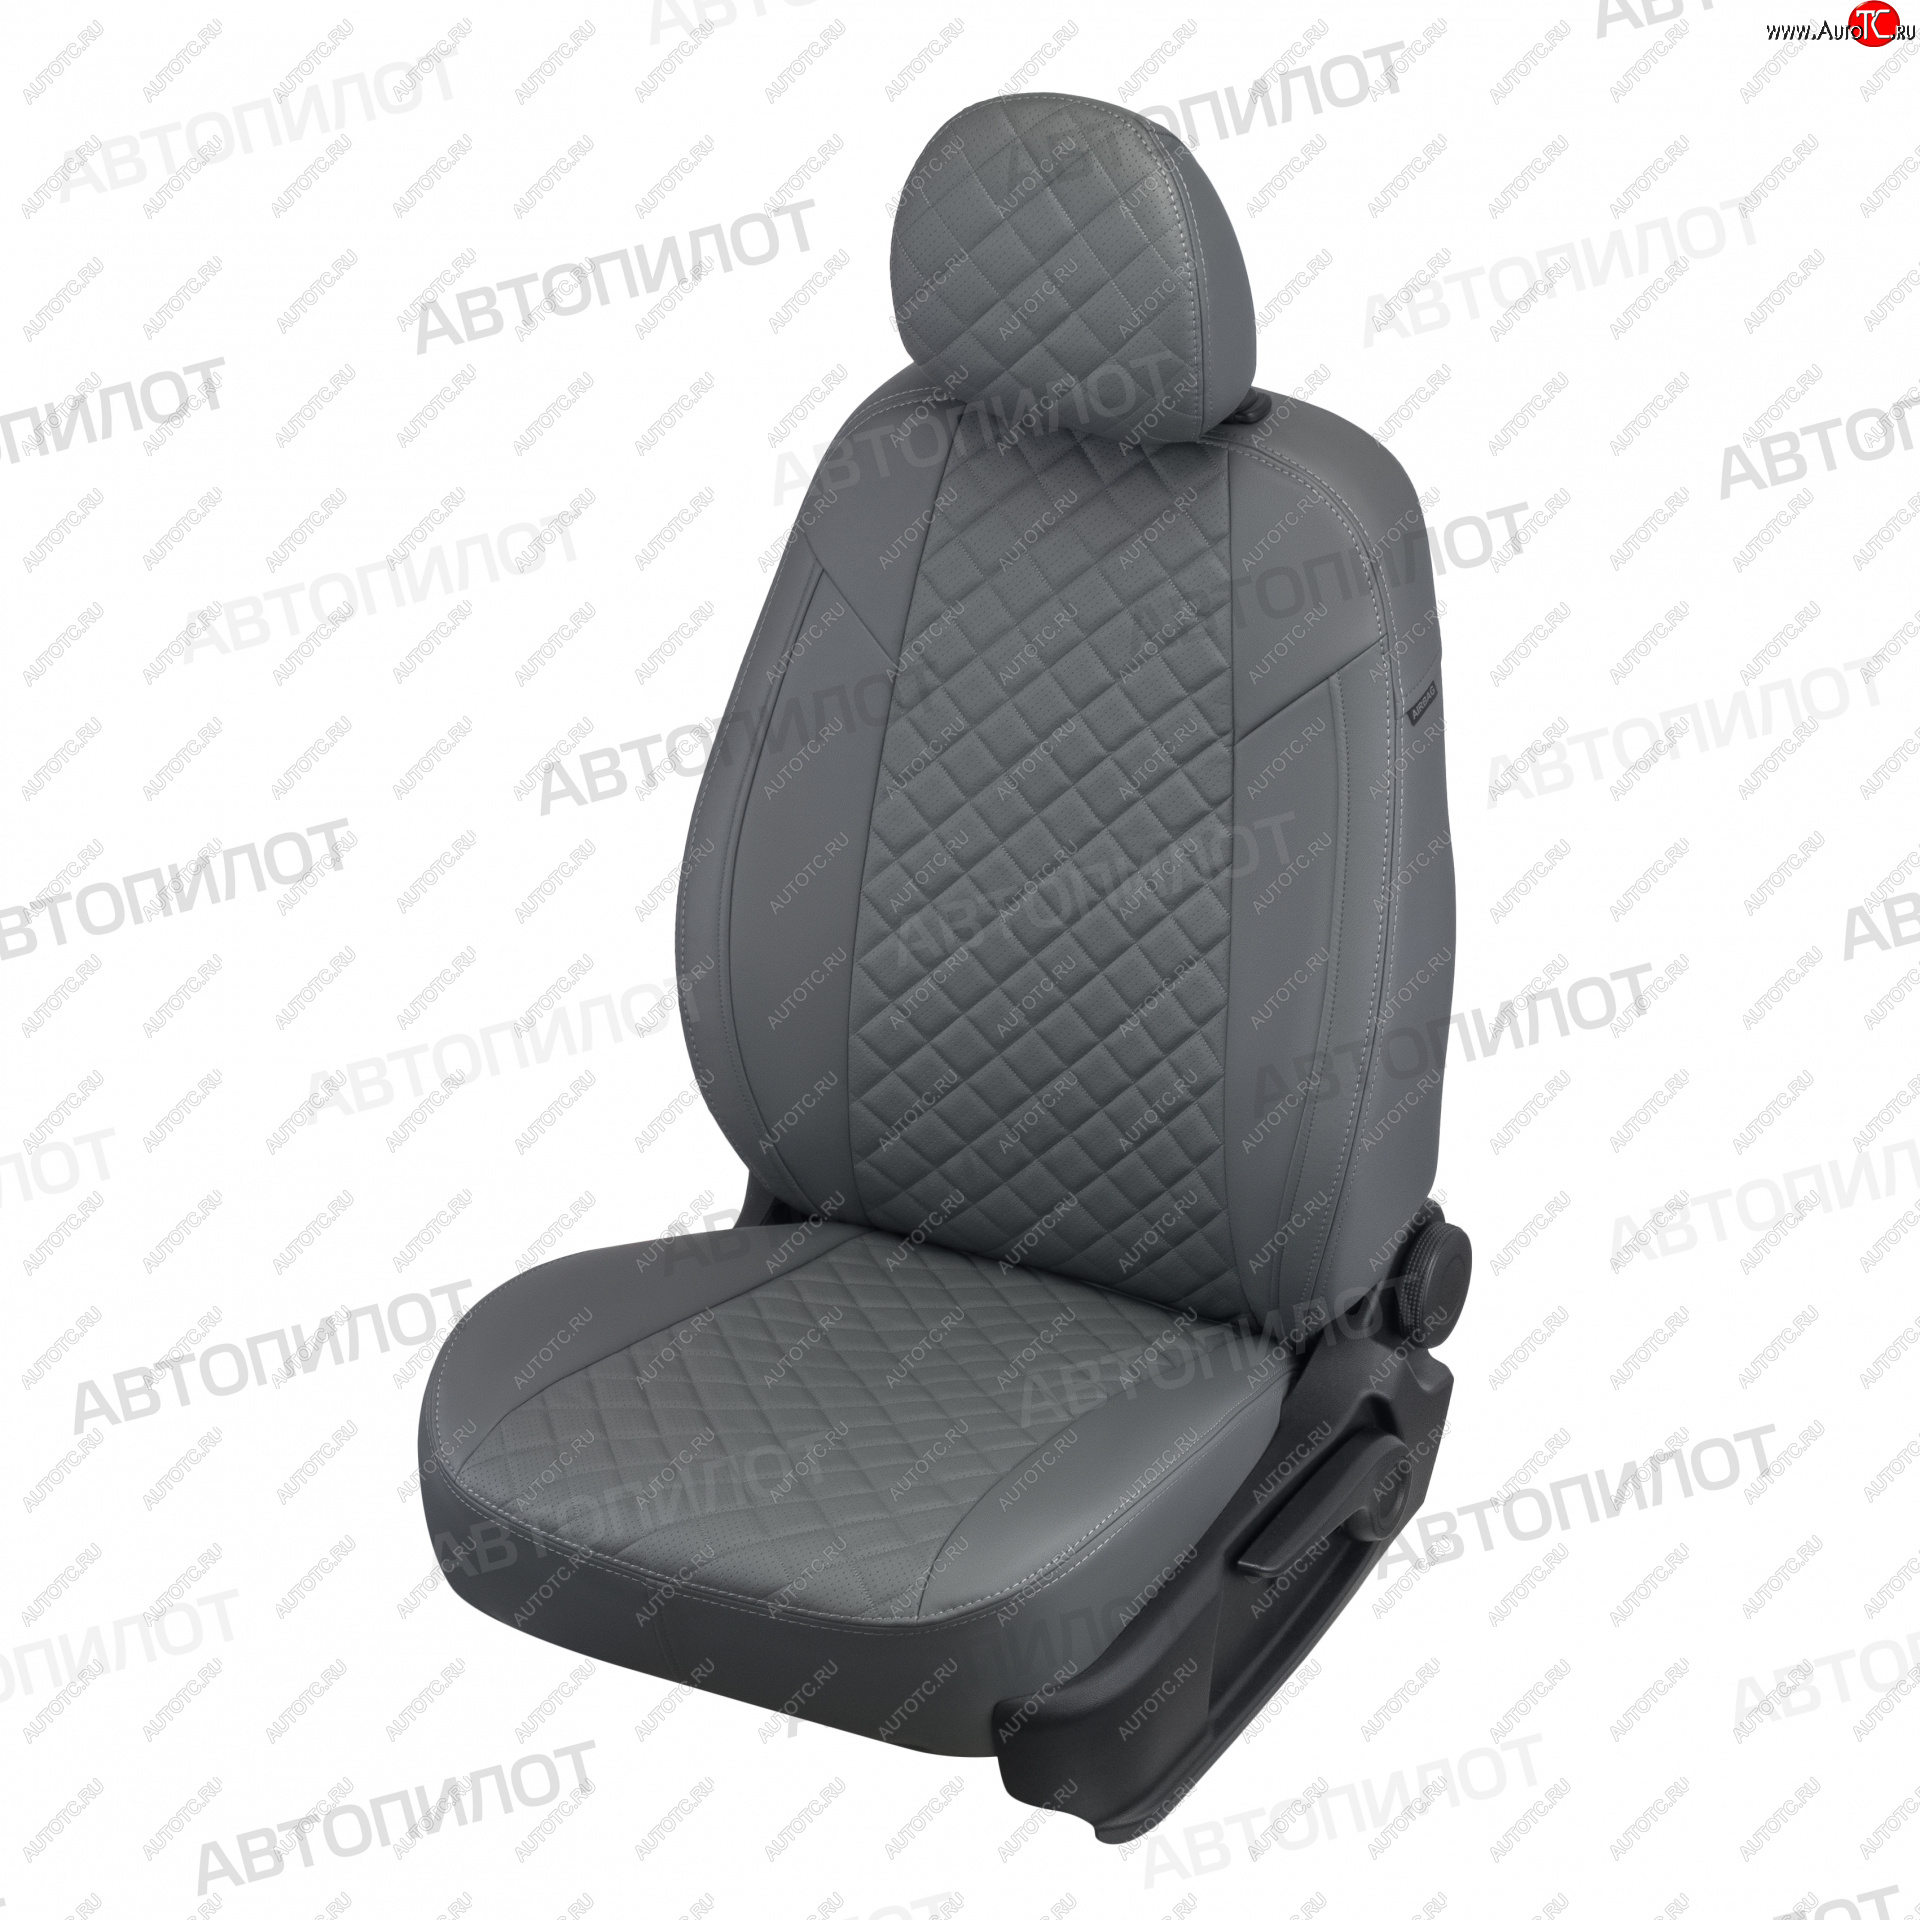 13 999 р. Чехлы сидений (экокожа) Автопилот Ромб  Chevrolet Trailblazer  GM800 (2012-2016) (серый)